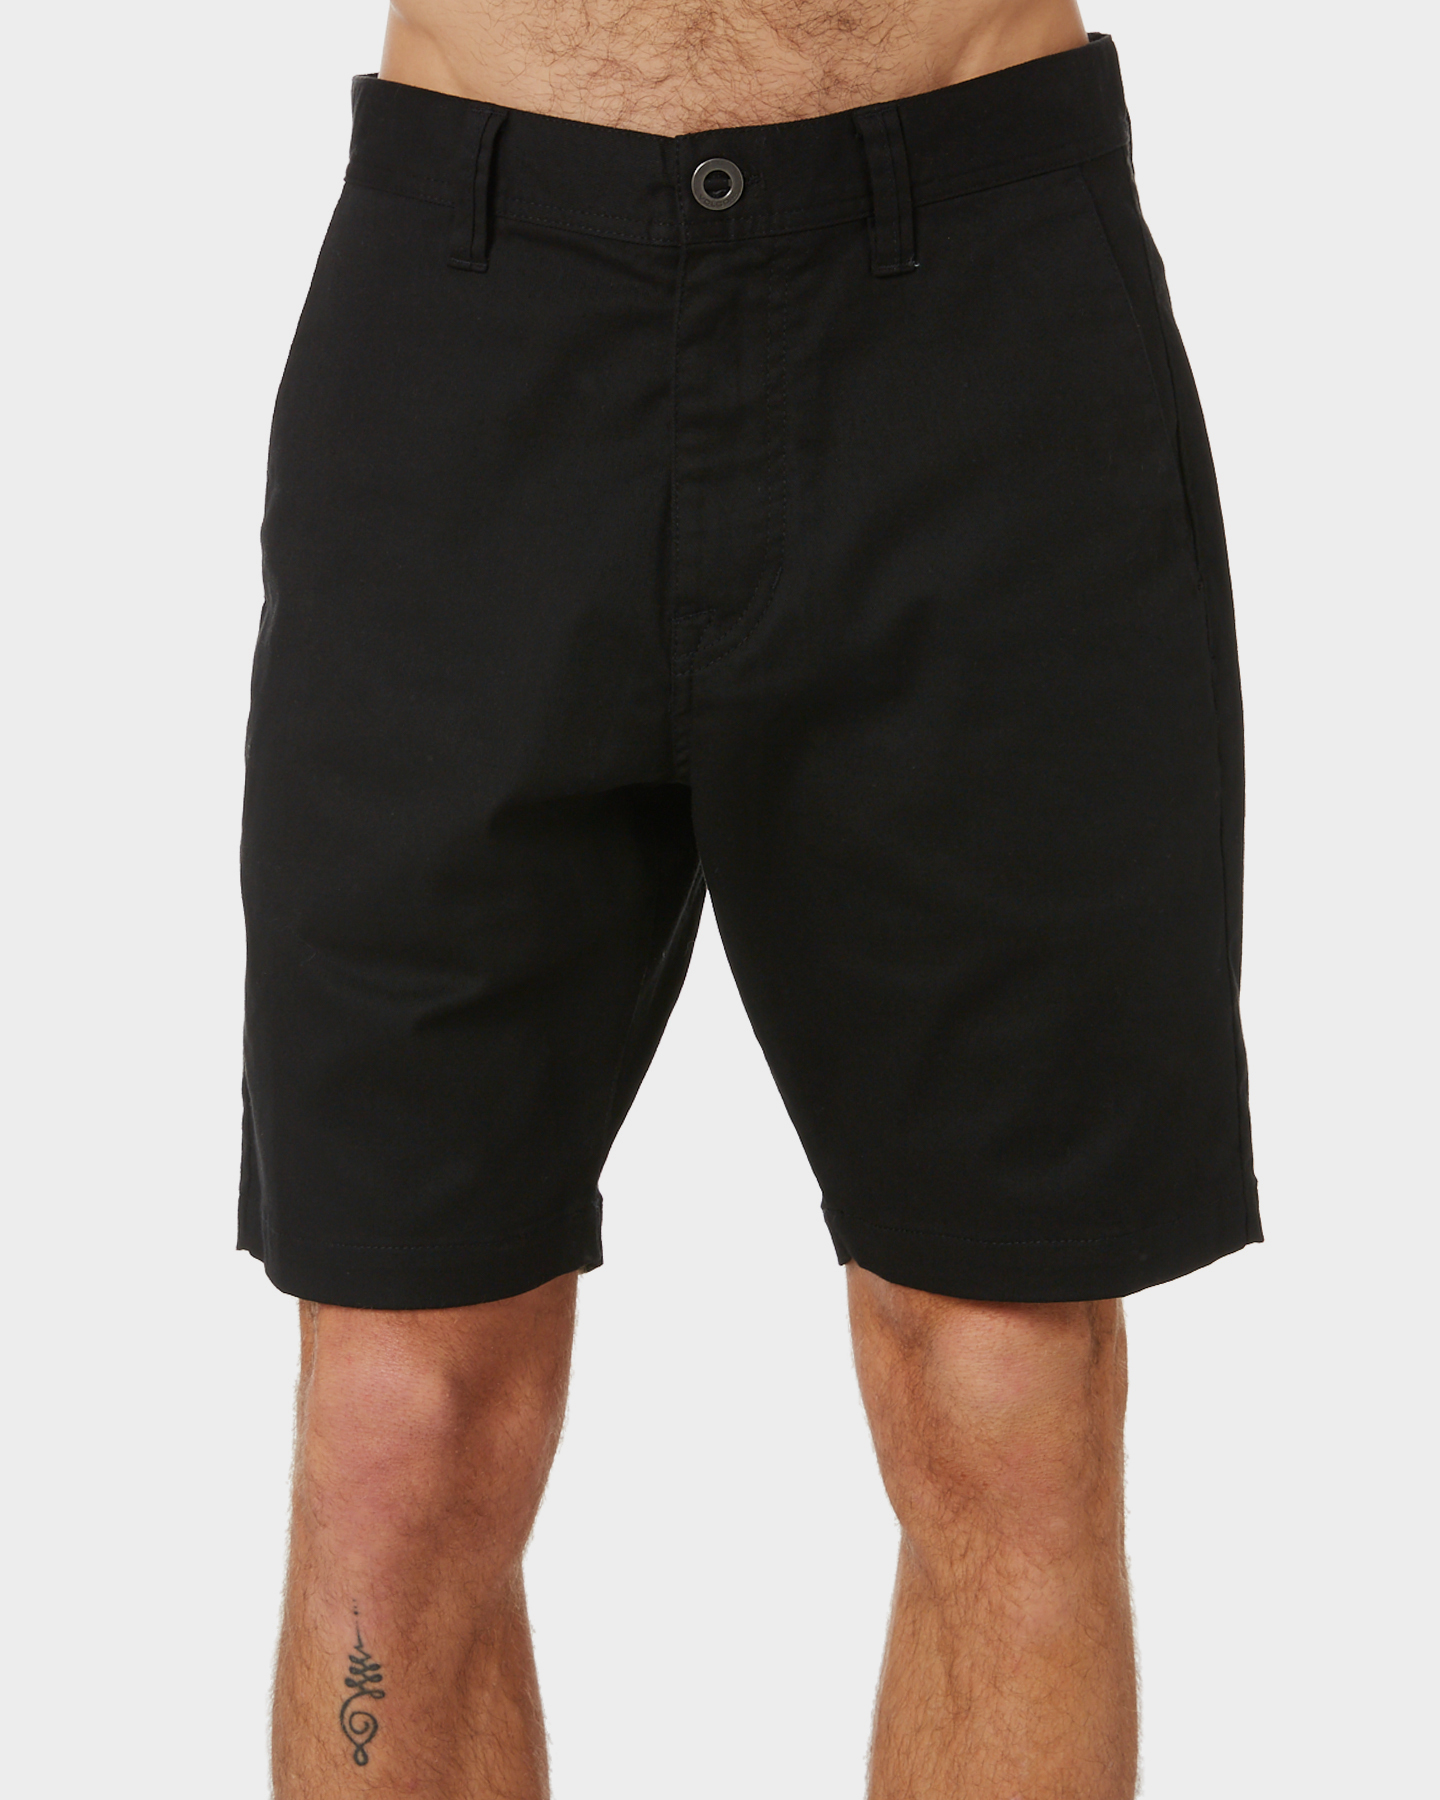 volcom shorts sale